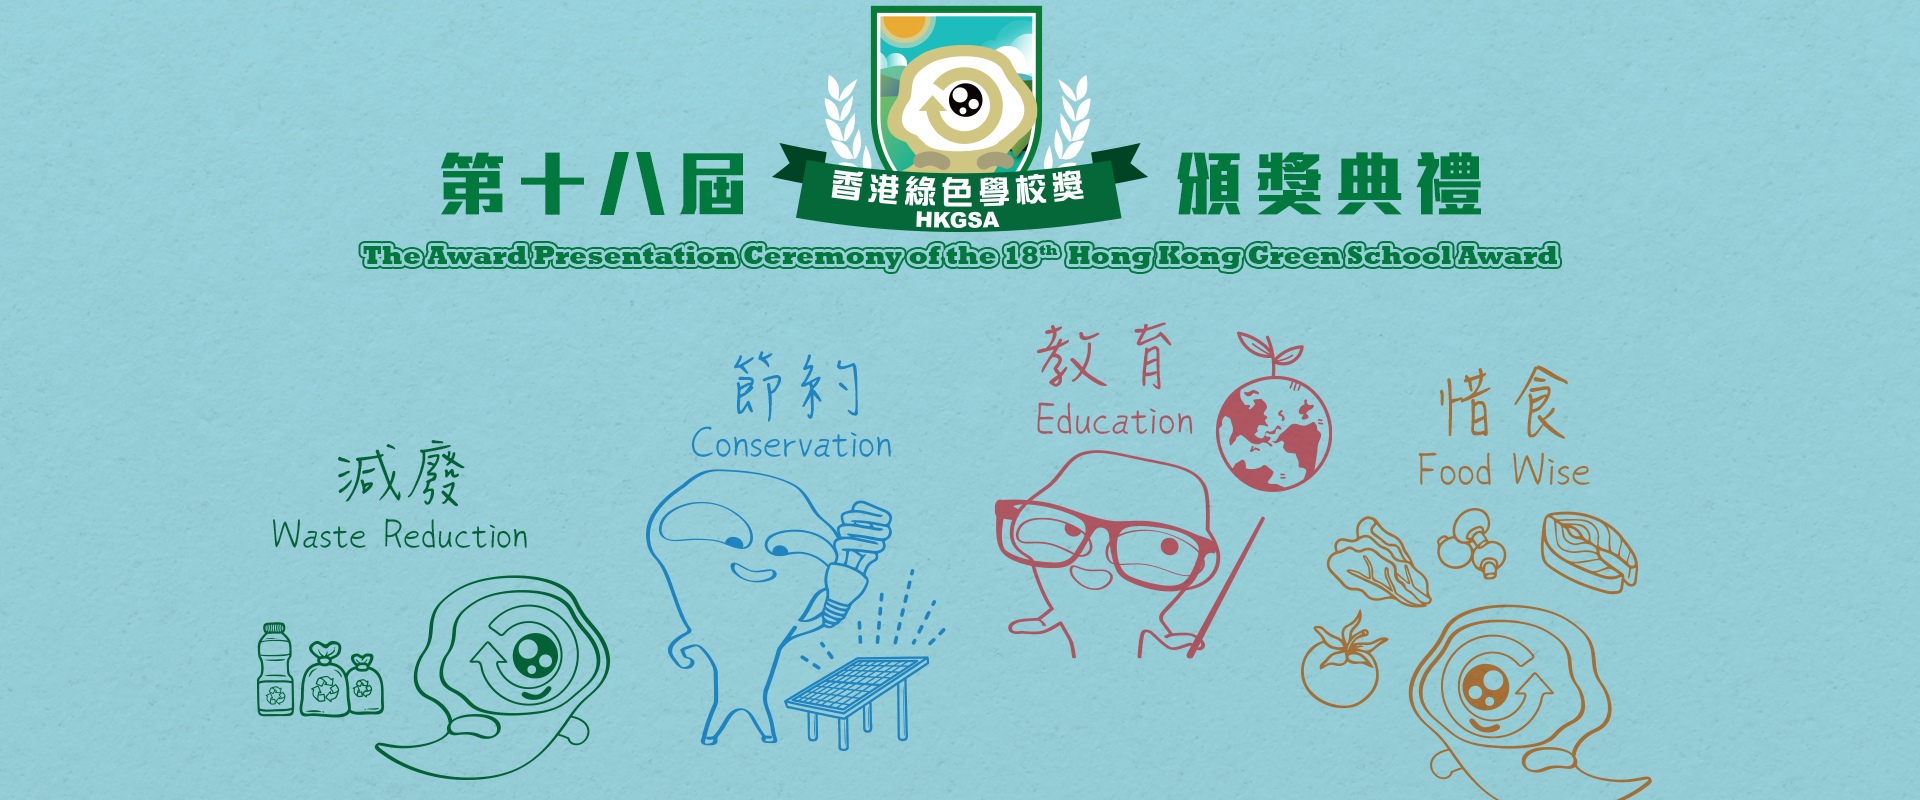 The Award Presentation Ceremony of the 18th Hong Kong Green School Award